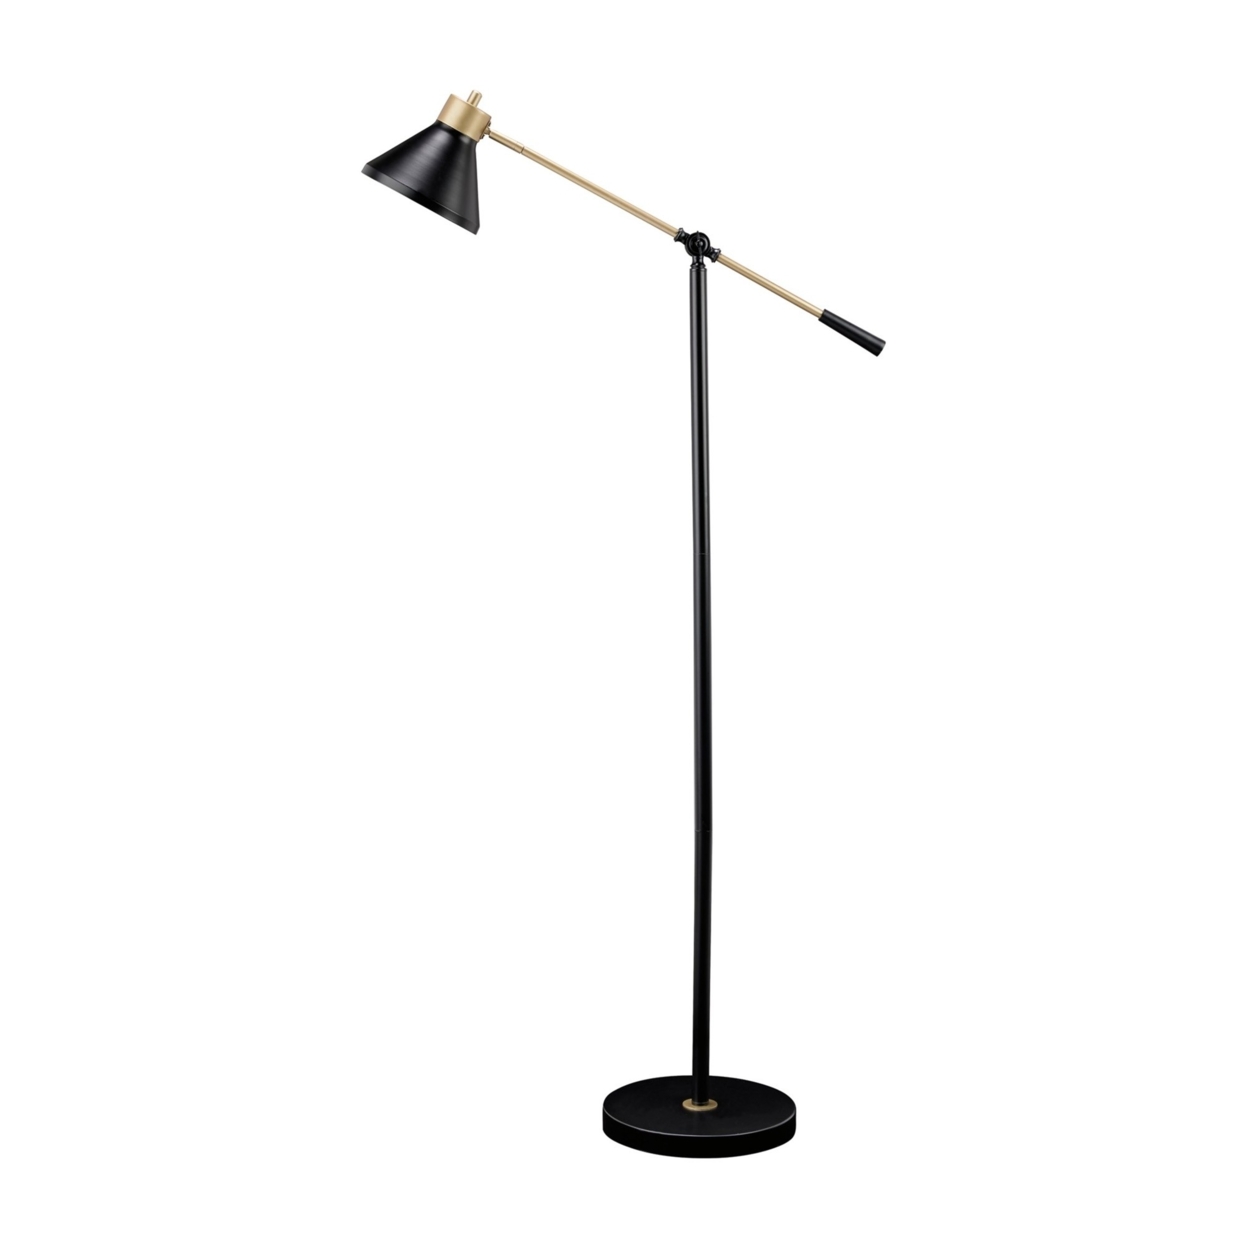 58 Inch Classic Metal Floor Lamp, Adjustable Shade Height, Gold, Black- Saltoro Sherpi